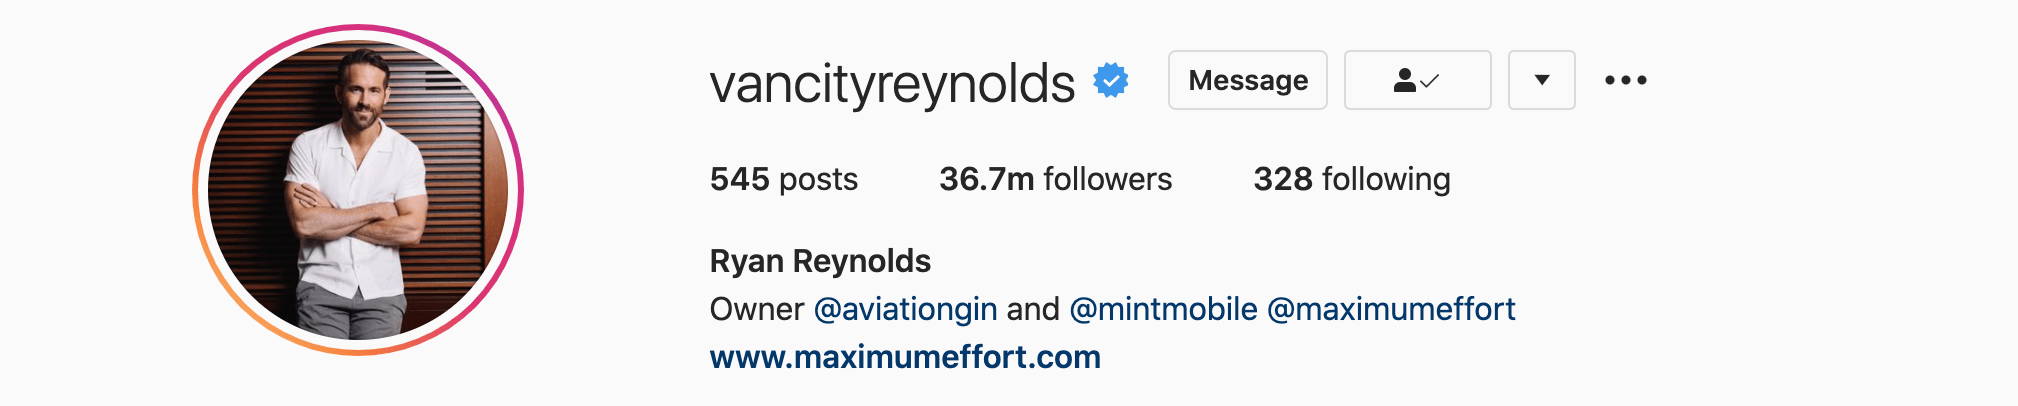 Top Instagram Influencers - RYAN REYNOLDS